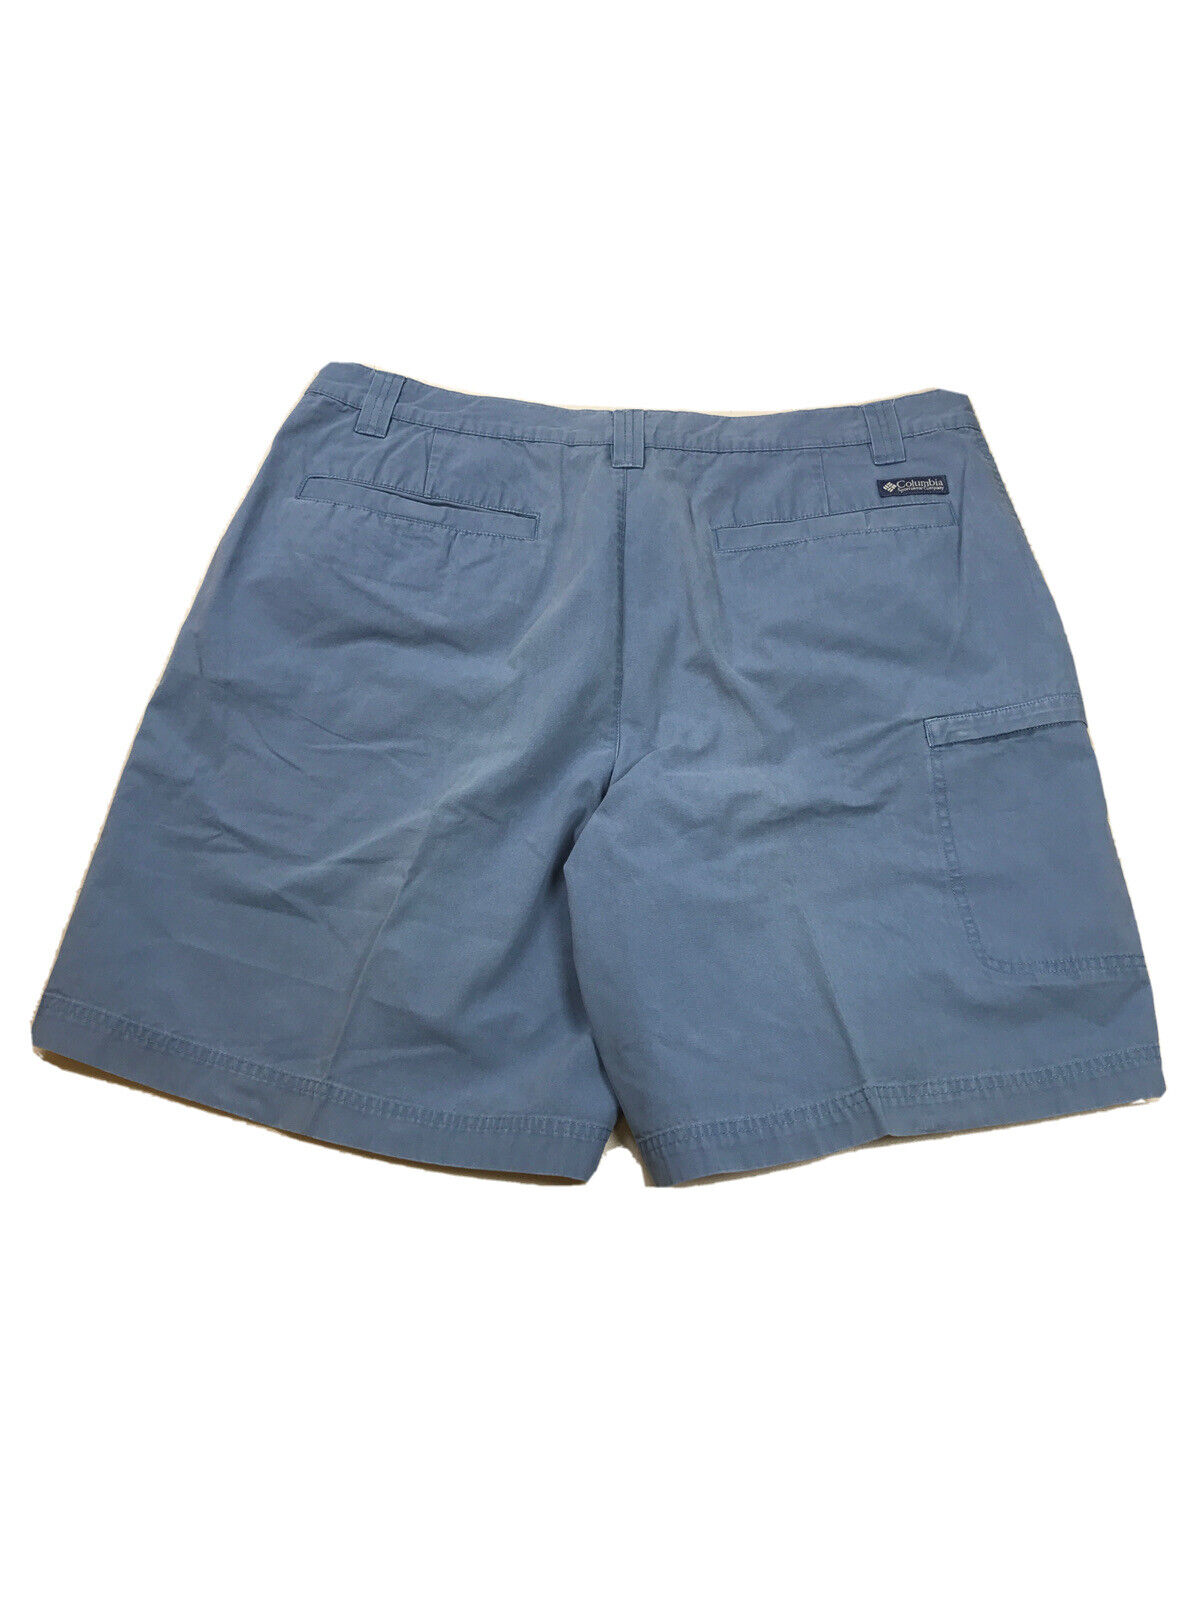 Columbia Men's Blue Cotton Casual 10" Inseam Shorts - 40